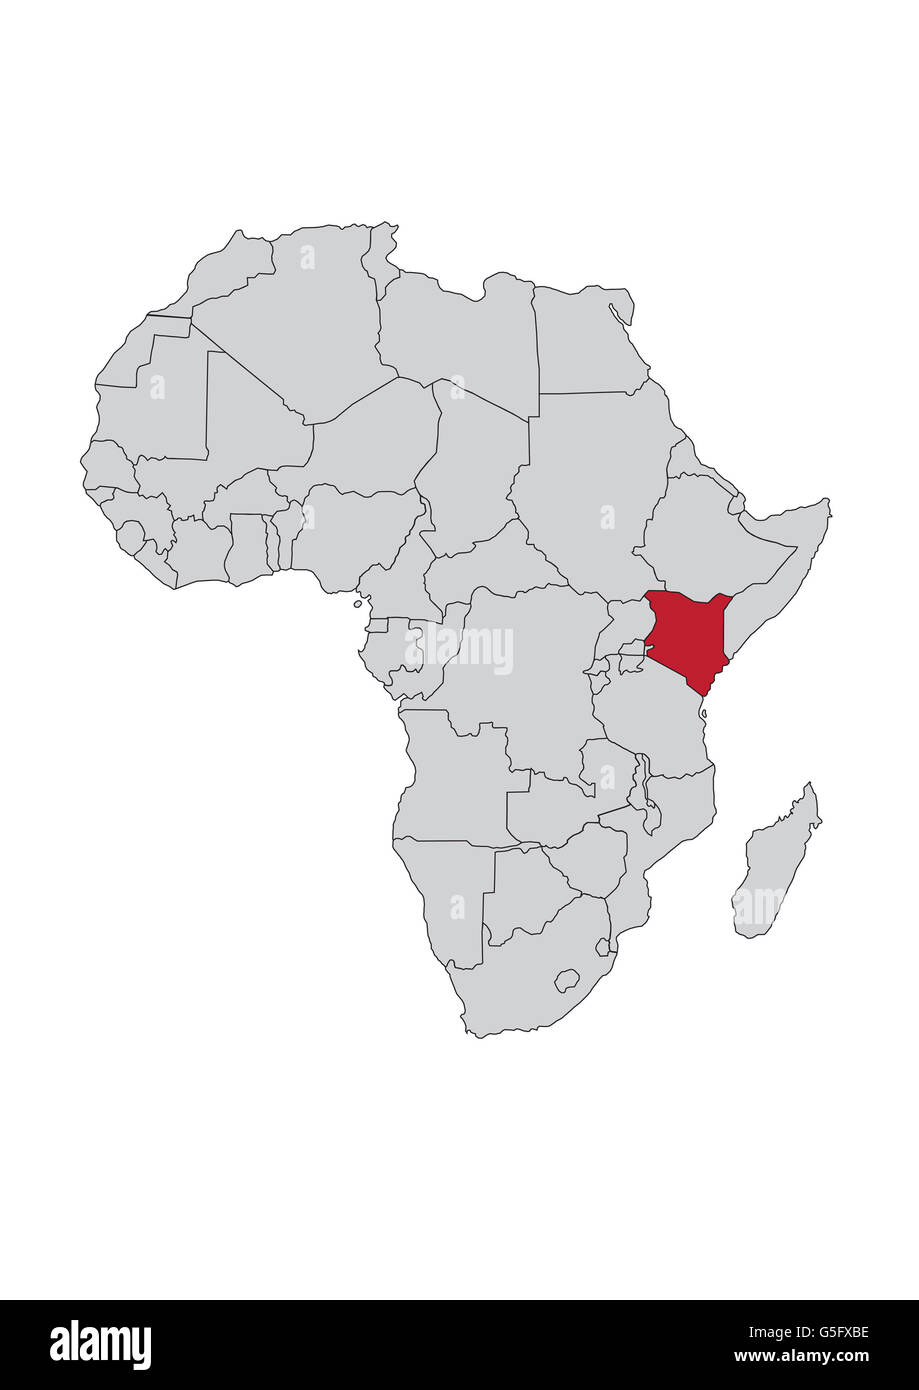 Map of Africa, Kenya Stock Photo